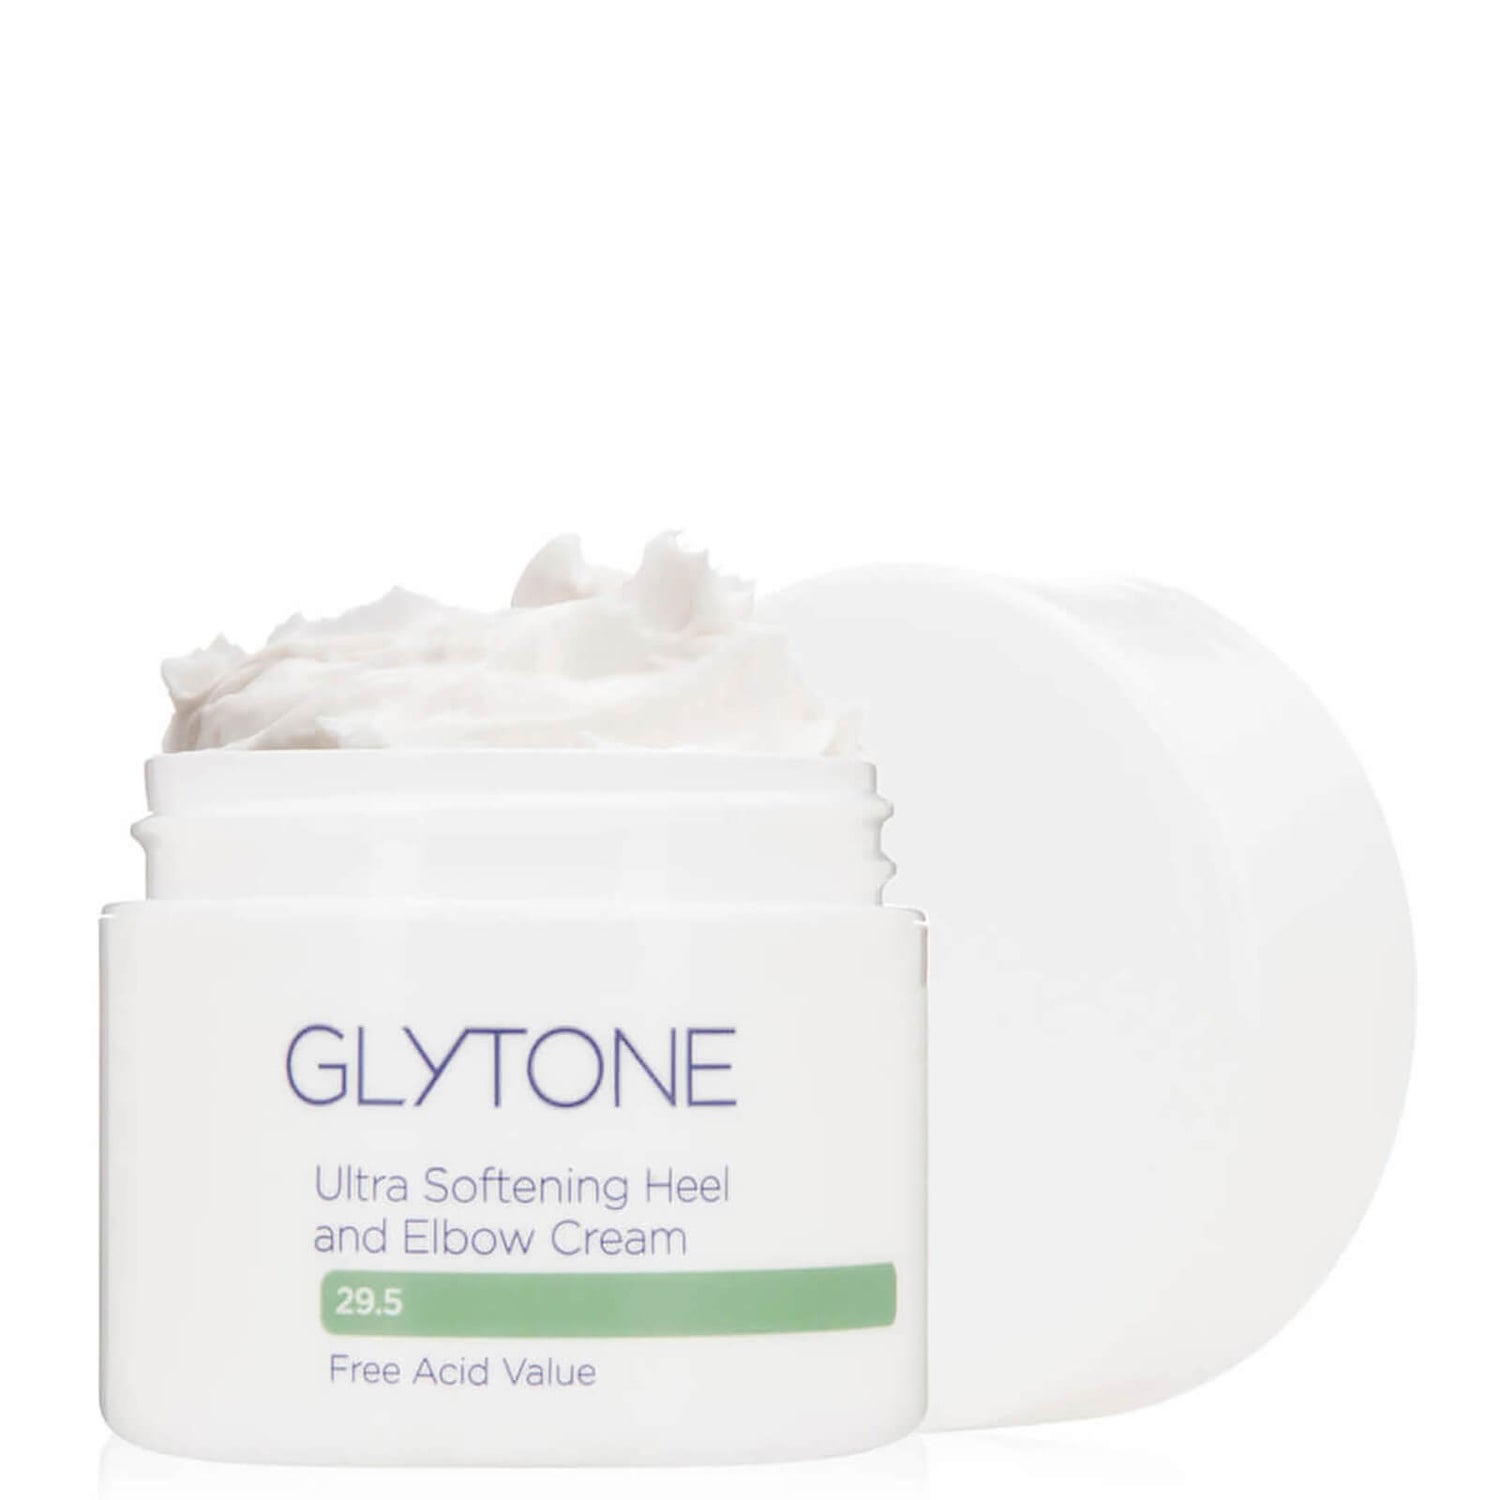 Glytone Ultra Softening Heel and Elbow Cream